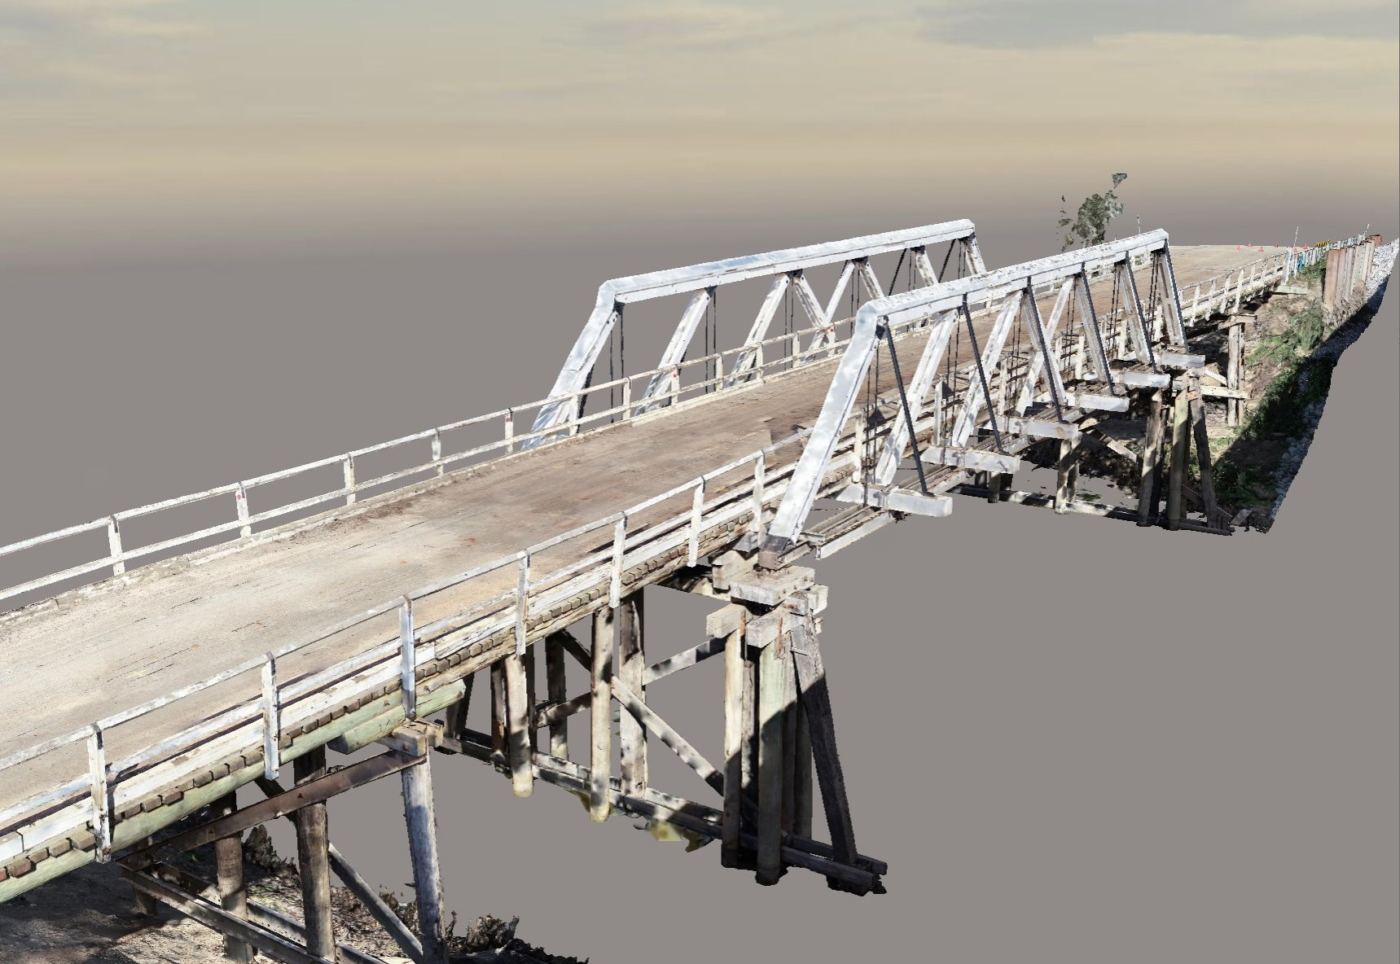 3D photogrammetry modelling of a bridge